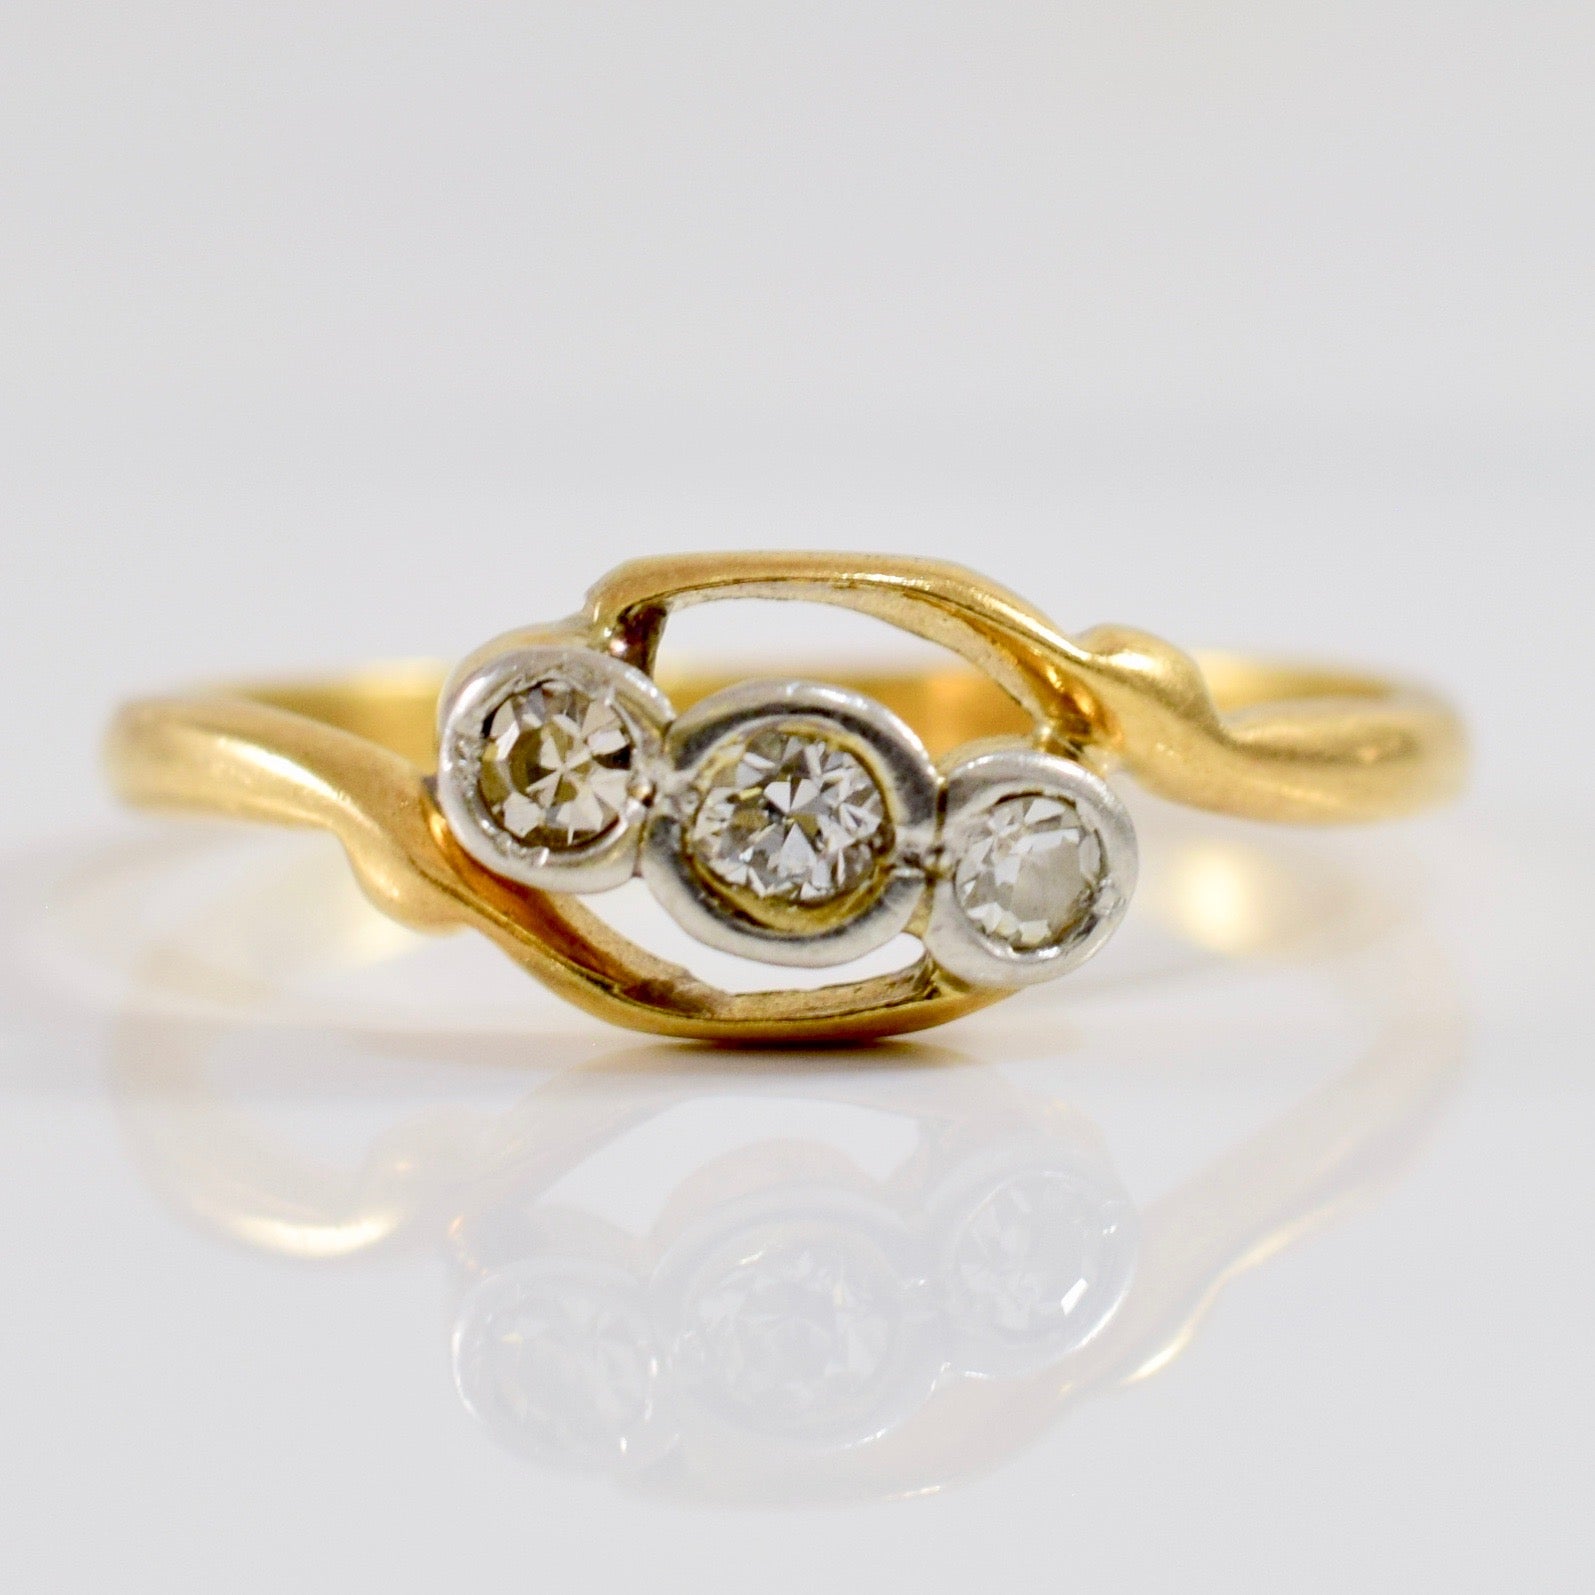 Art Nouveau Era Three Stone Engagement Ring | 0.08 ctw SZ 5.5 |